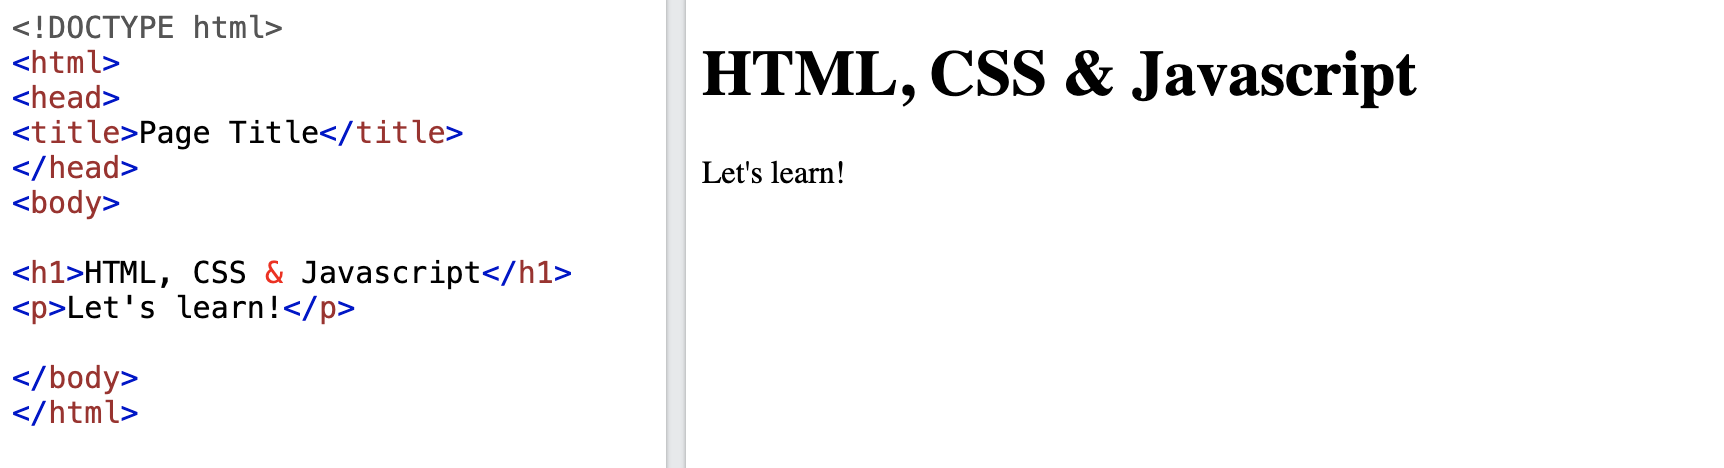 HTML CSS & Javascript in code